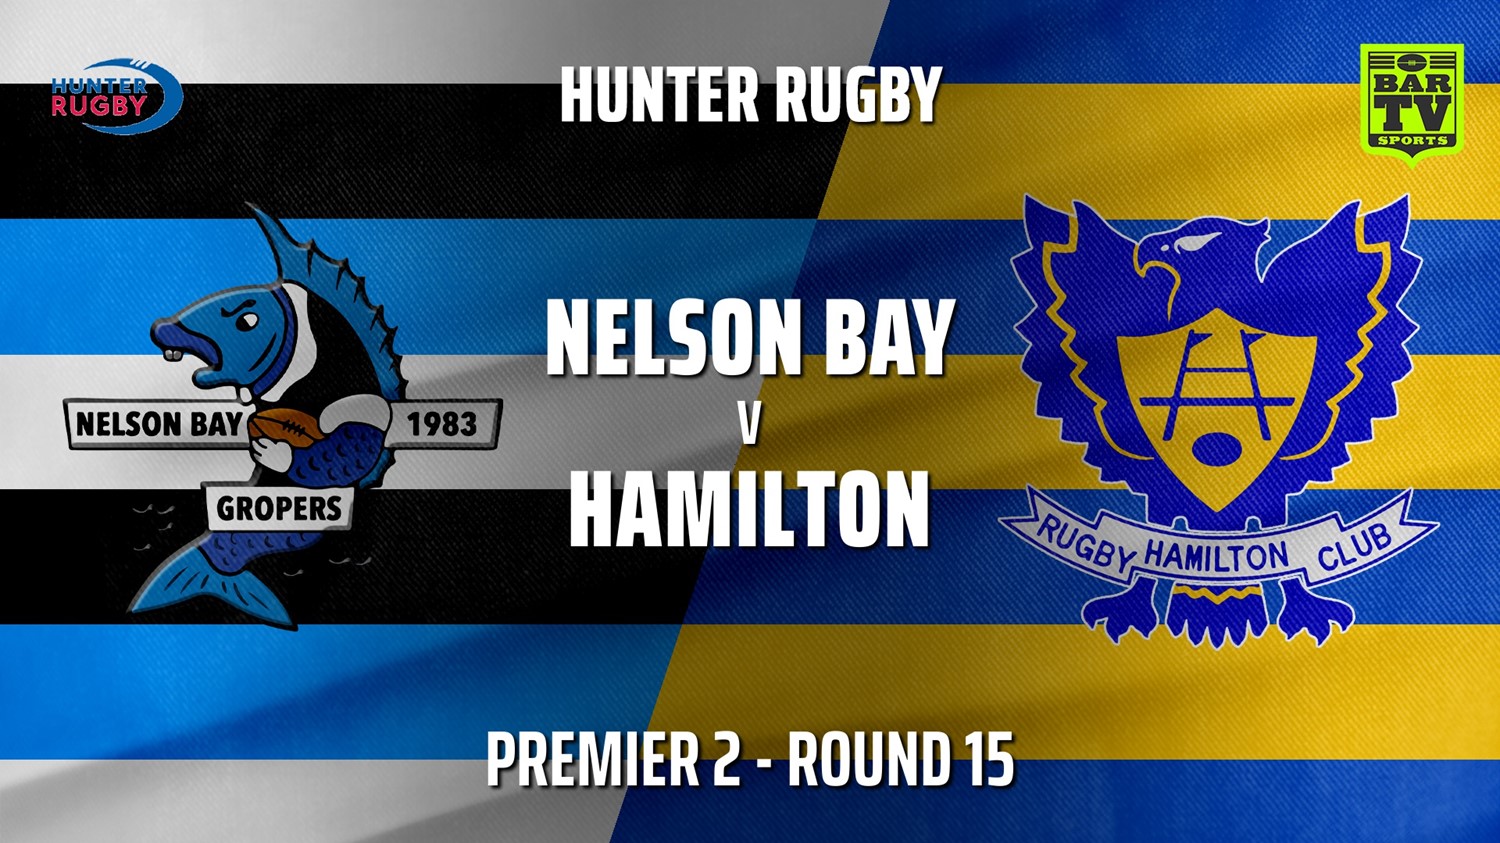 210731-Hunter Rugby Round 15 - Premier 2 - Nelson Bay Gropers v Hamilton Hawks Slate Image